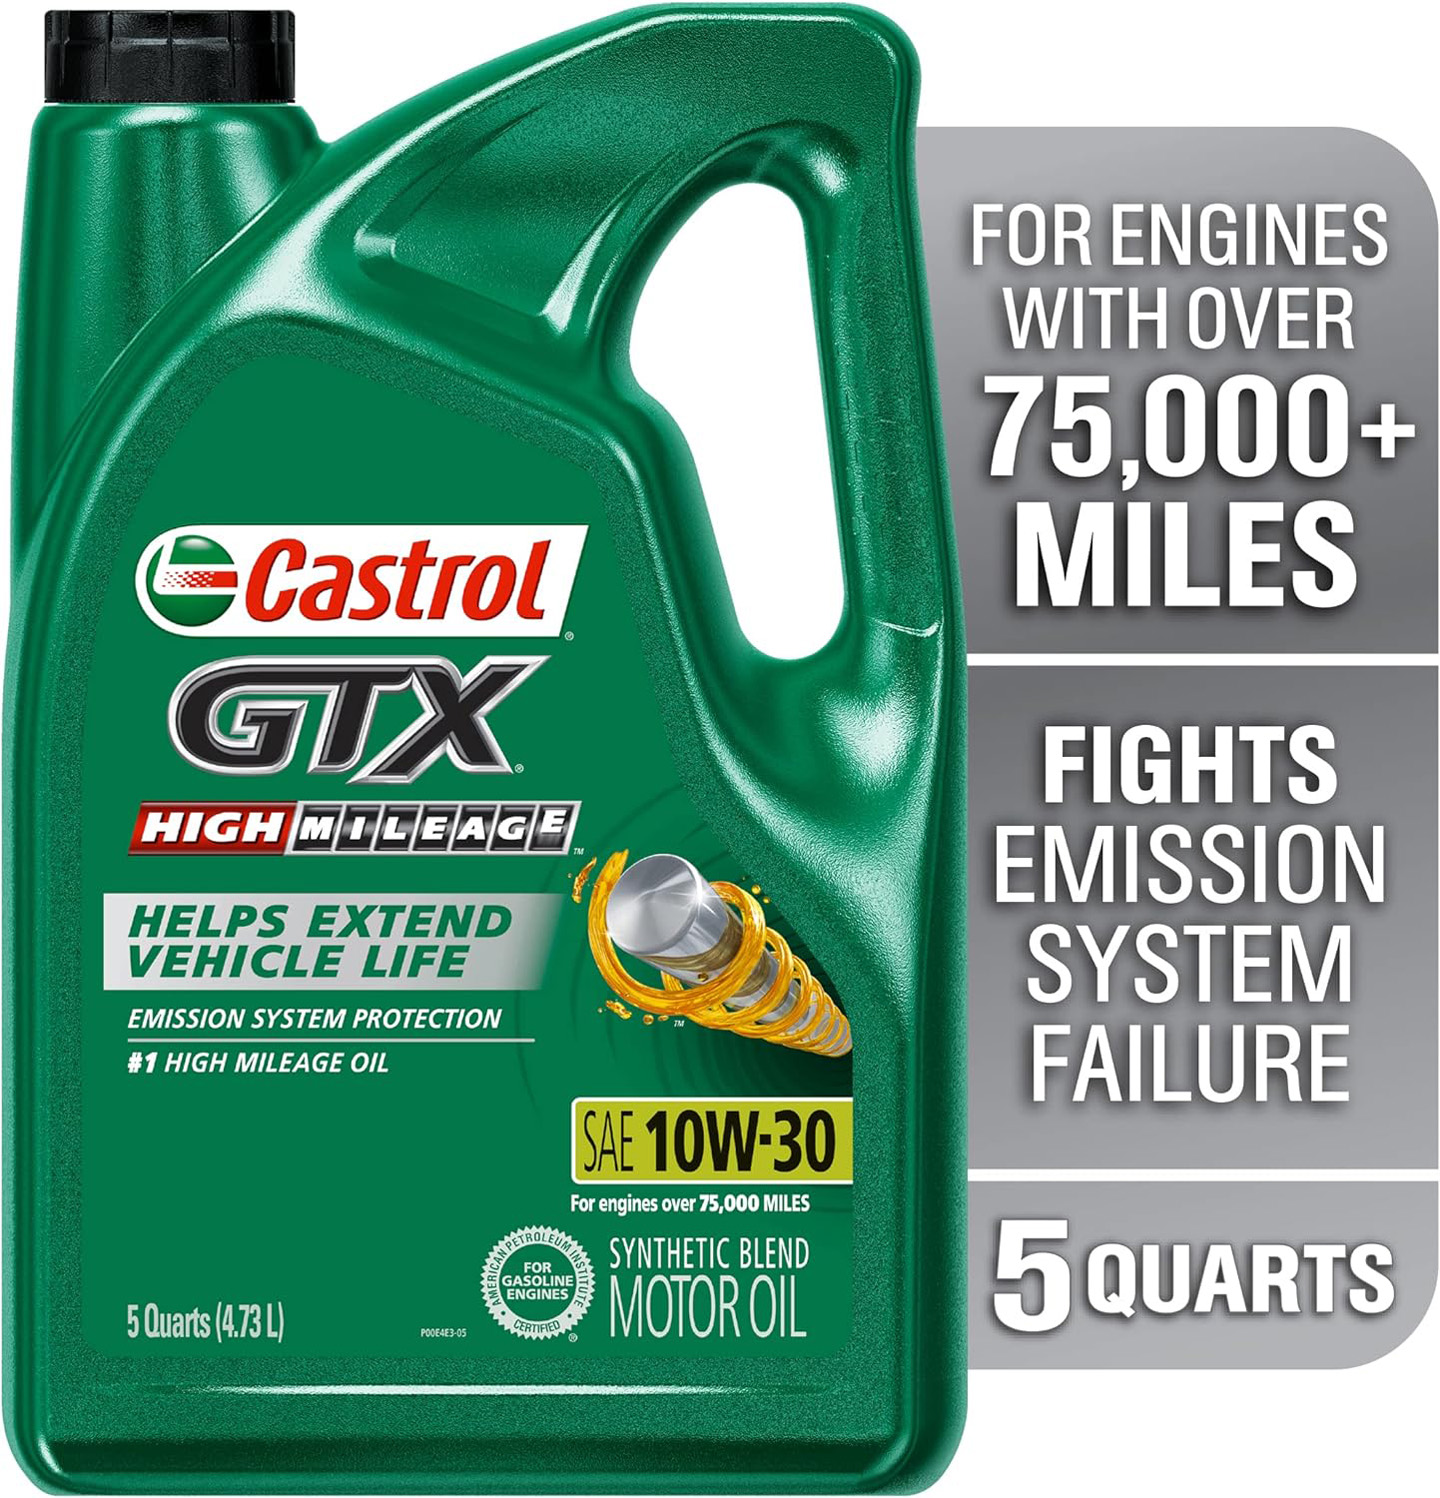 Castrol GTX High Mileage 10W-30 Synthetic Blend Motor Oil